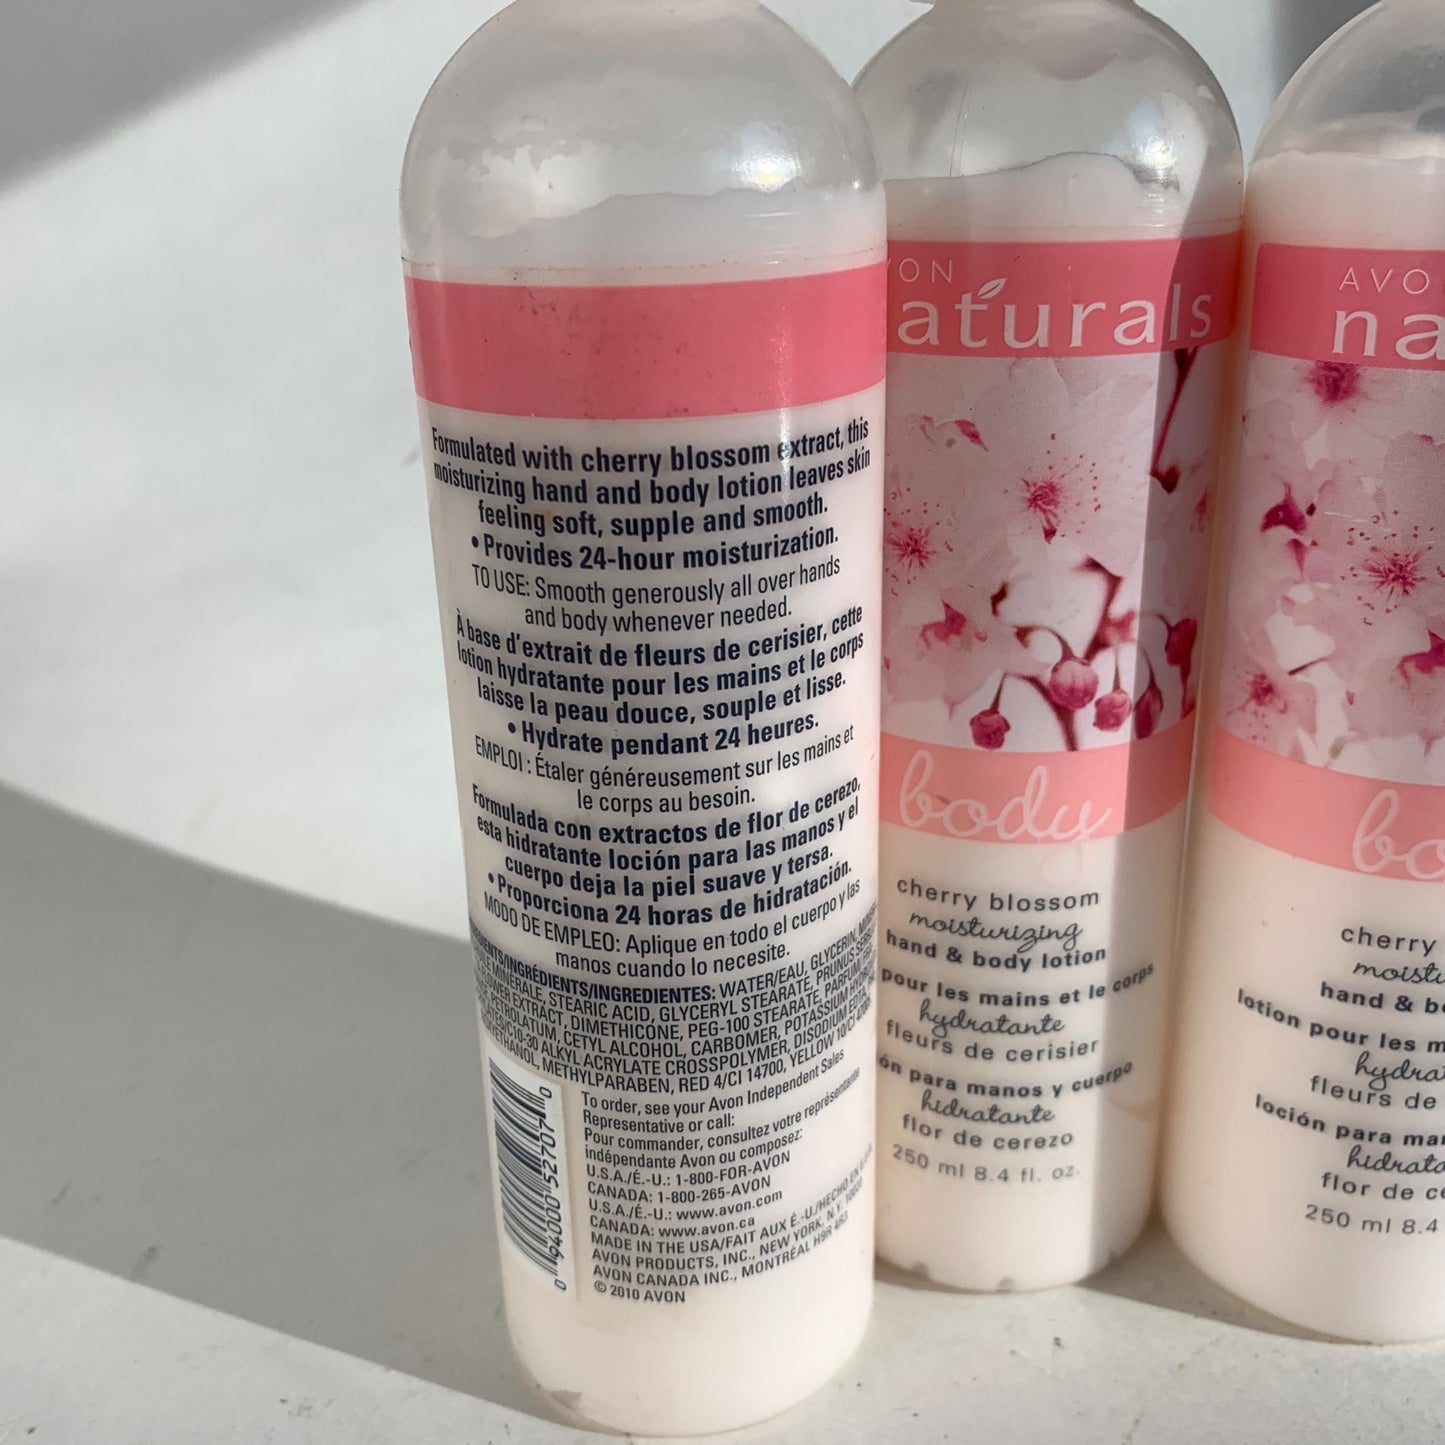 Avon Naturals Cherry Blossom Hand Body Lotion 8.4 oz NEW